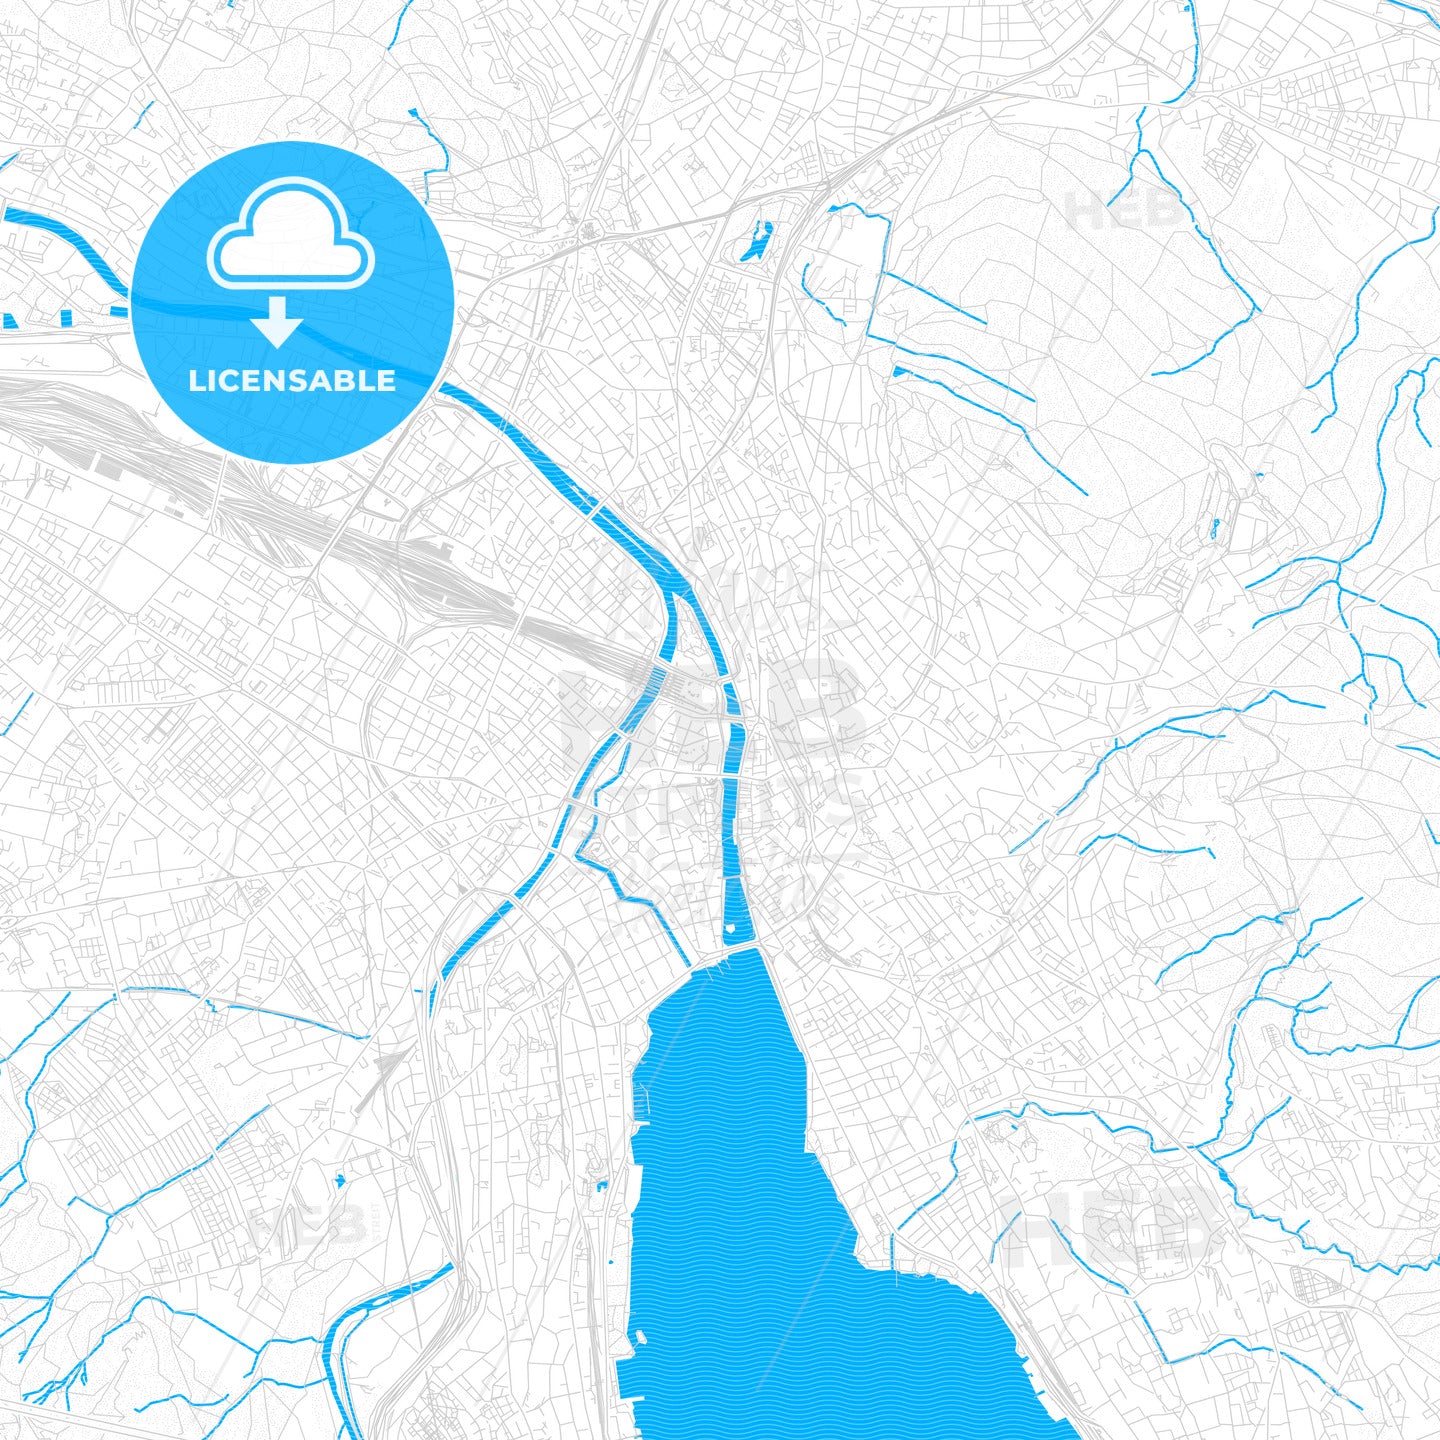 Zürich, Switzerland PDF vector map with water in focus